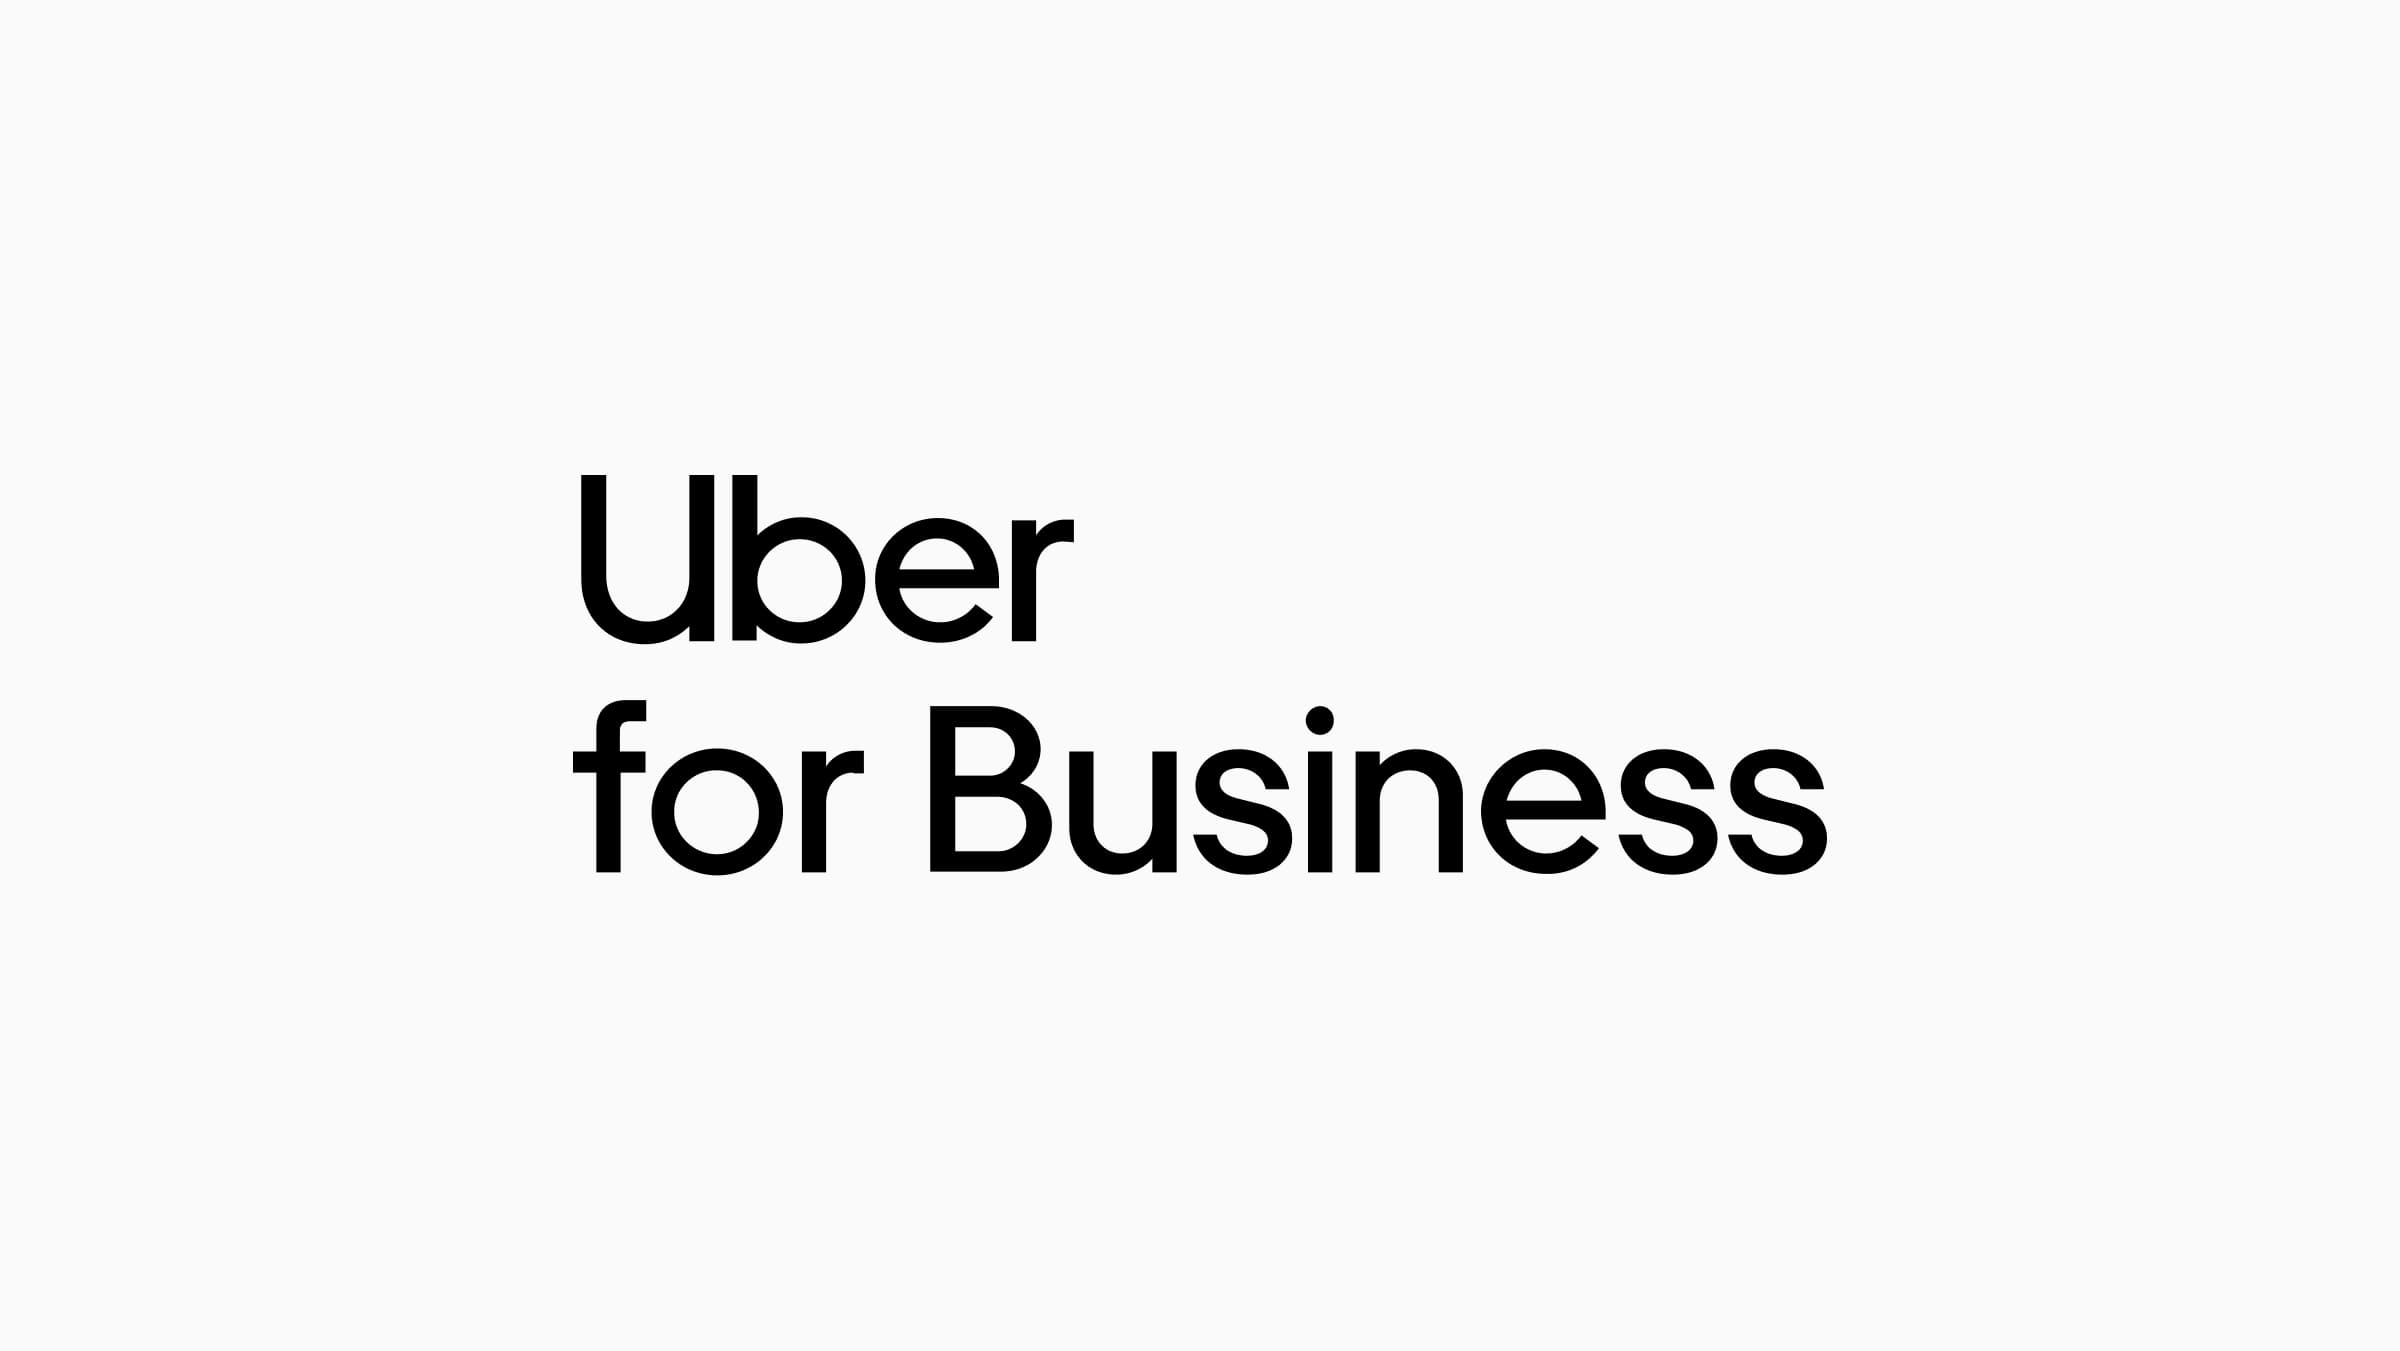 The Uber for Business logo